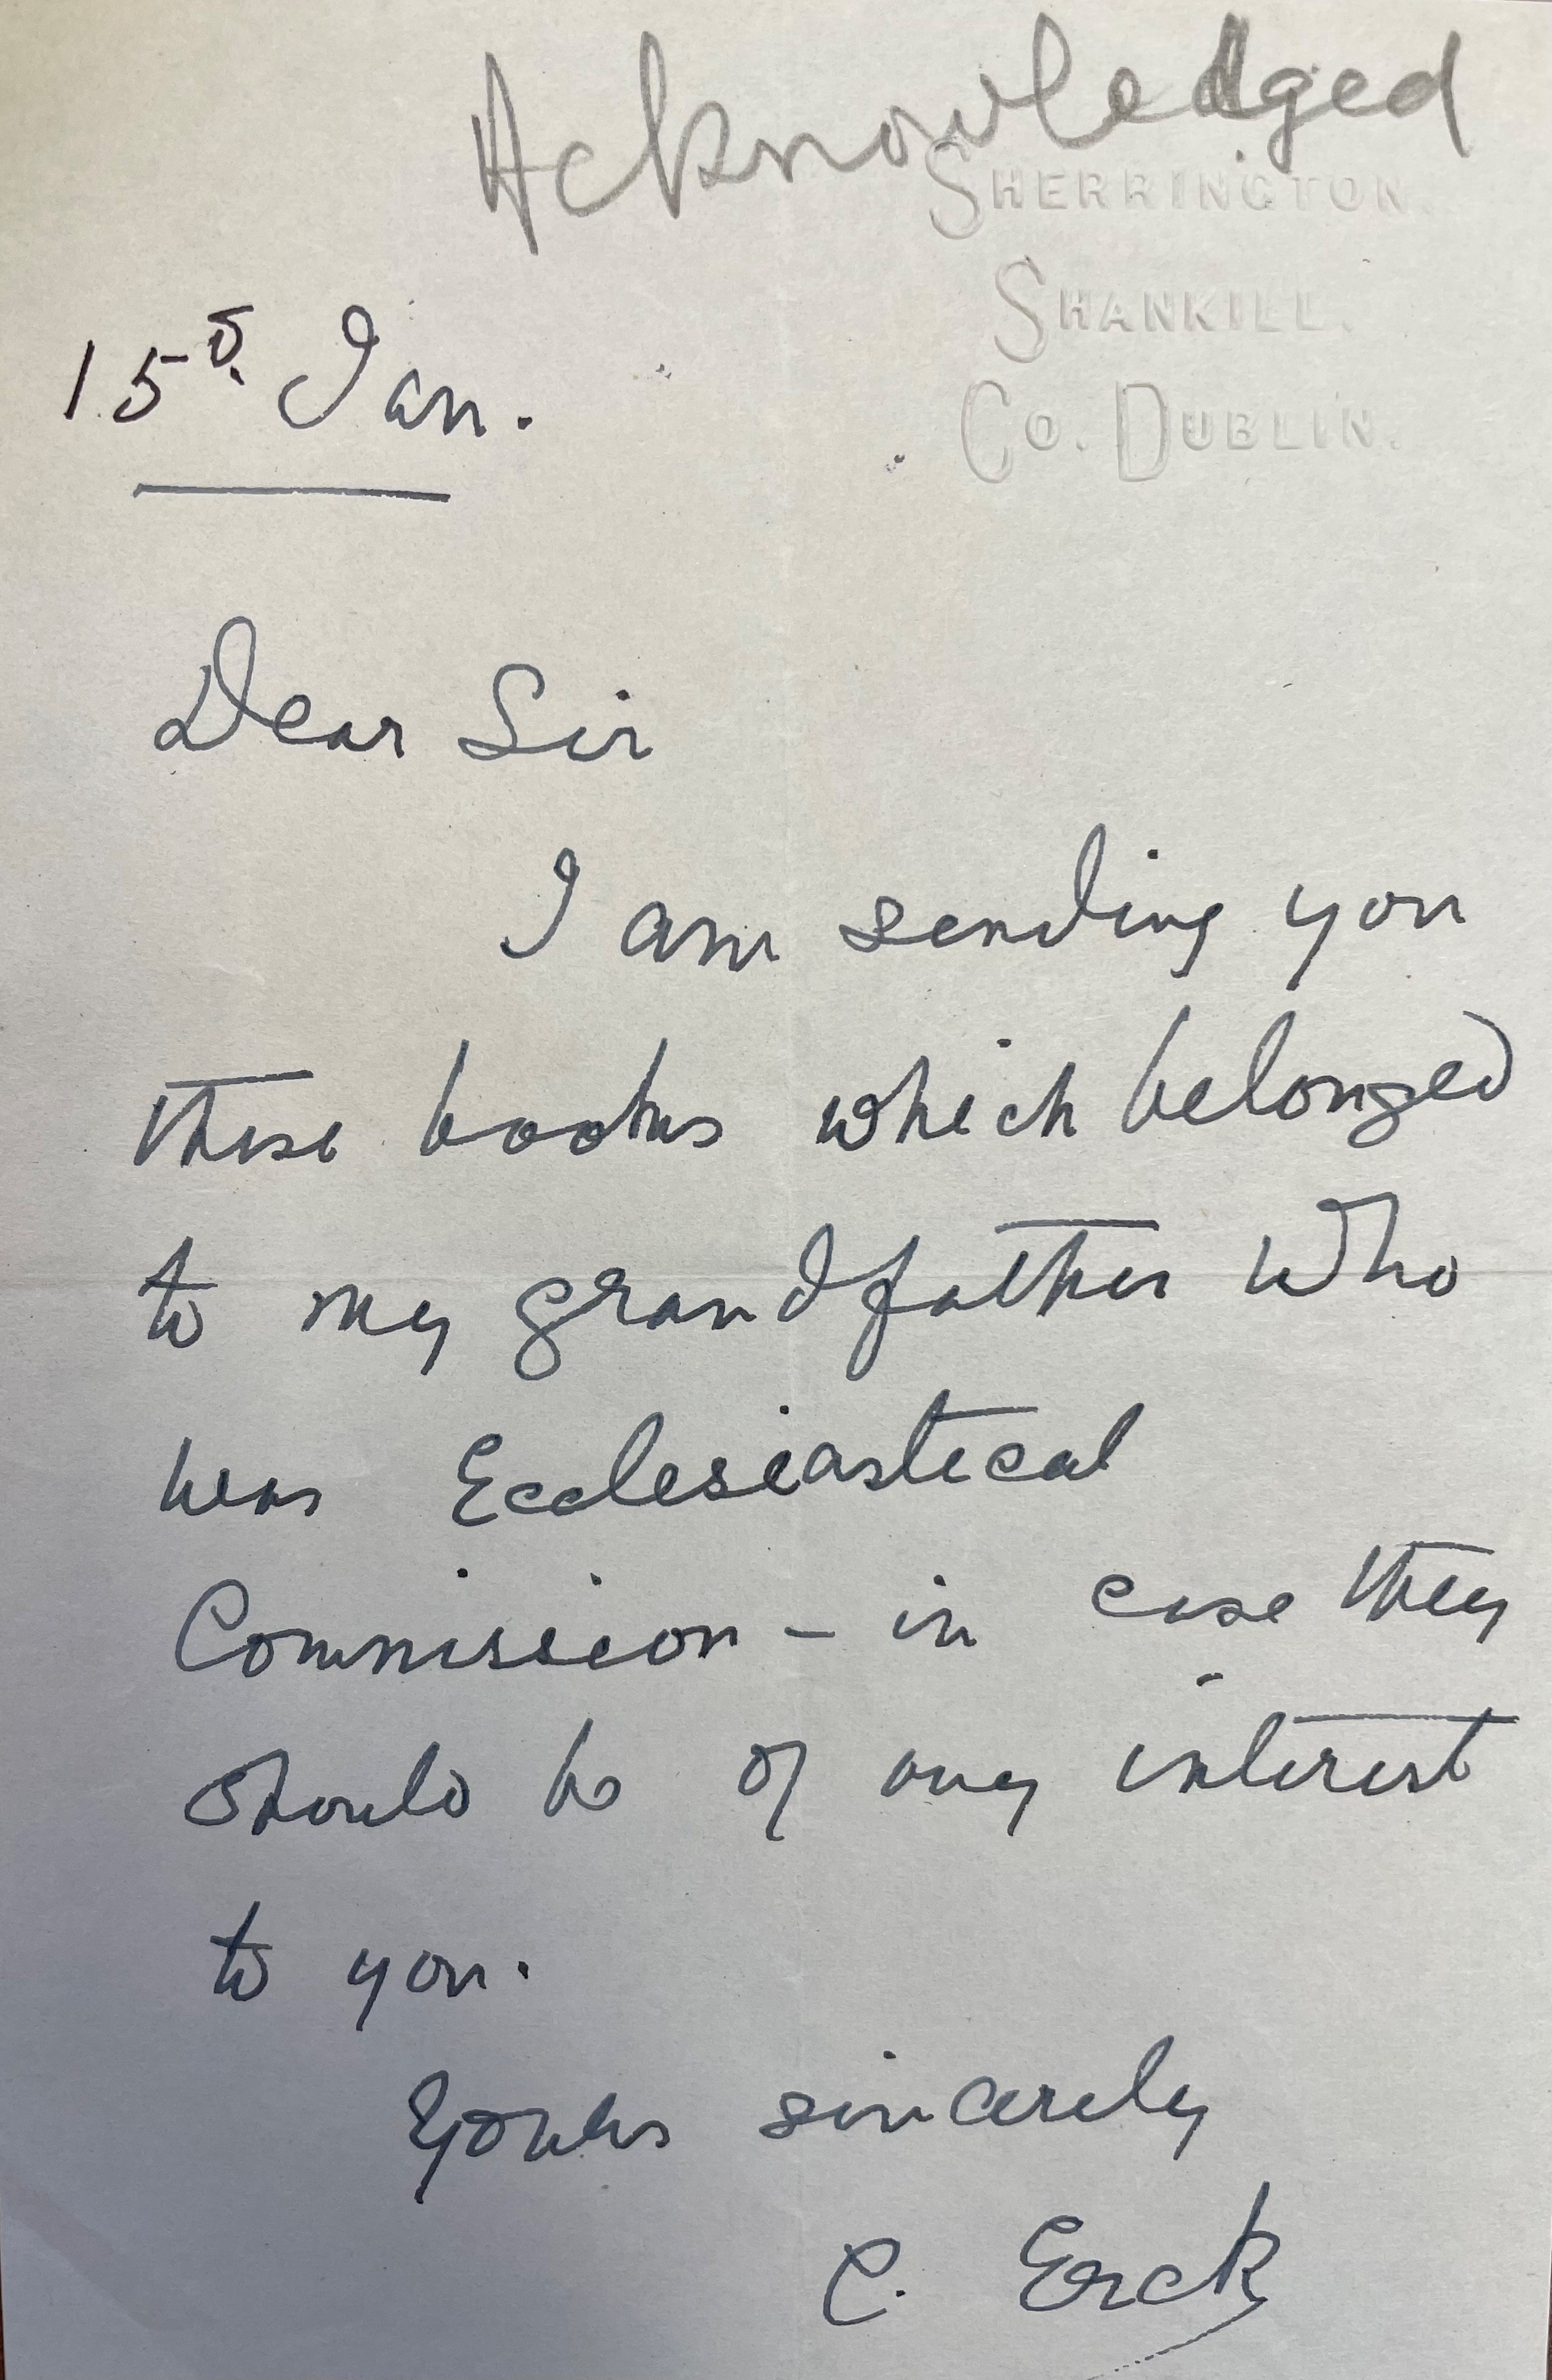 RCB Library Donation Correspondence, 1949